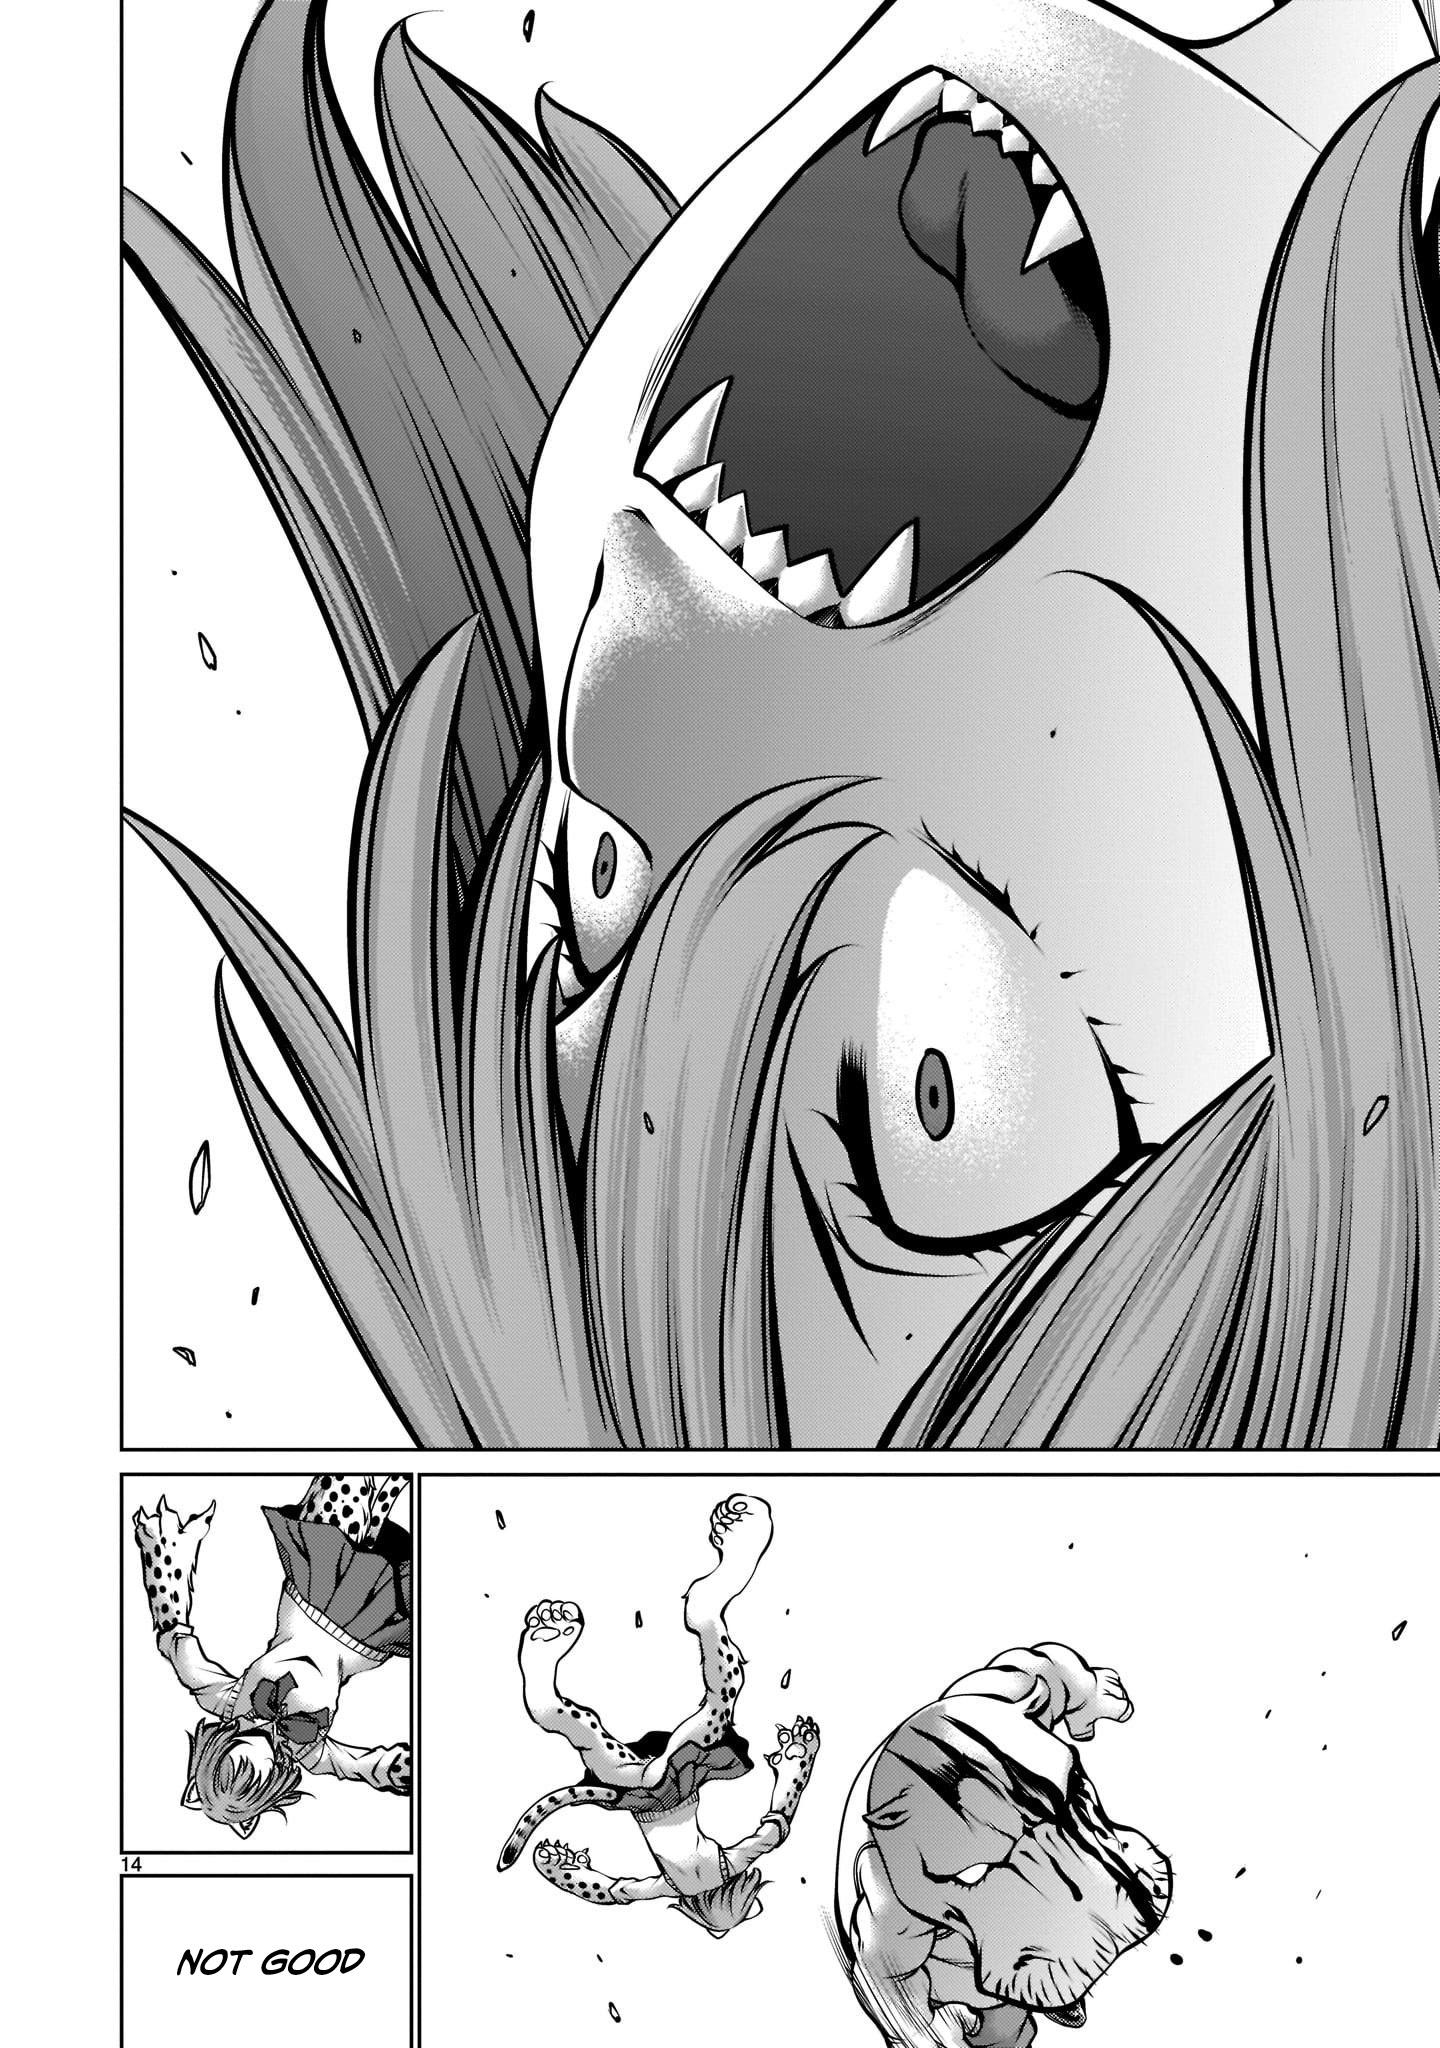 Killing Bites Vol.20 Ch.96 Page 3 - Mangago